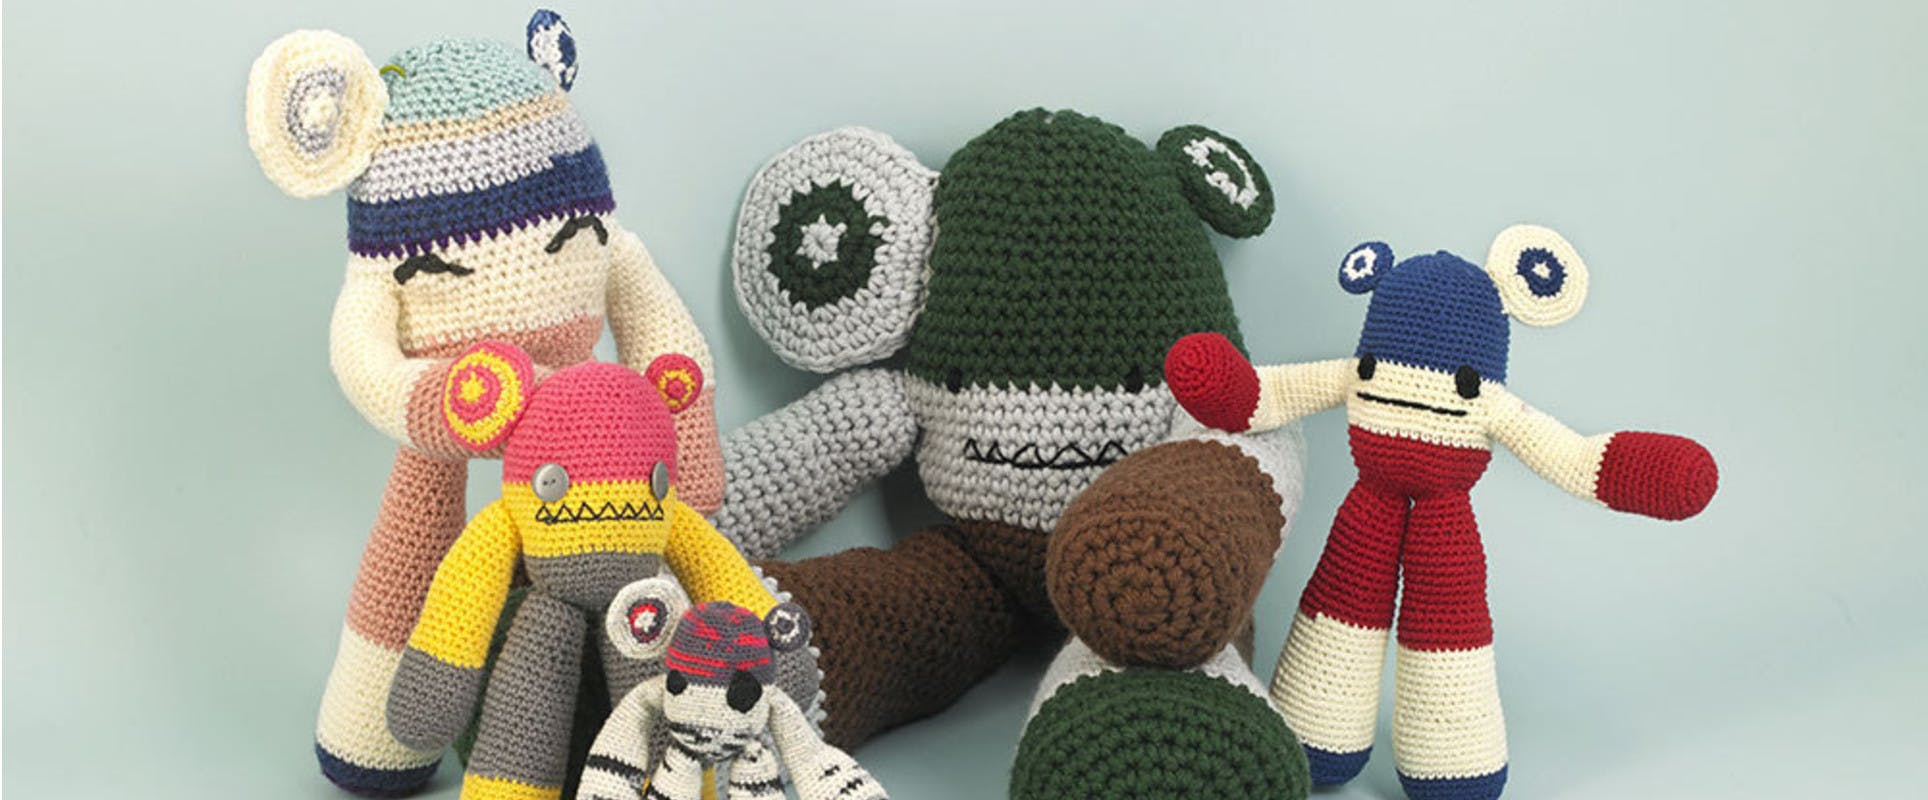 Squishy Alien Stitch Crochet Pattern beginner Friendly 